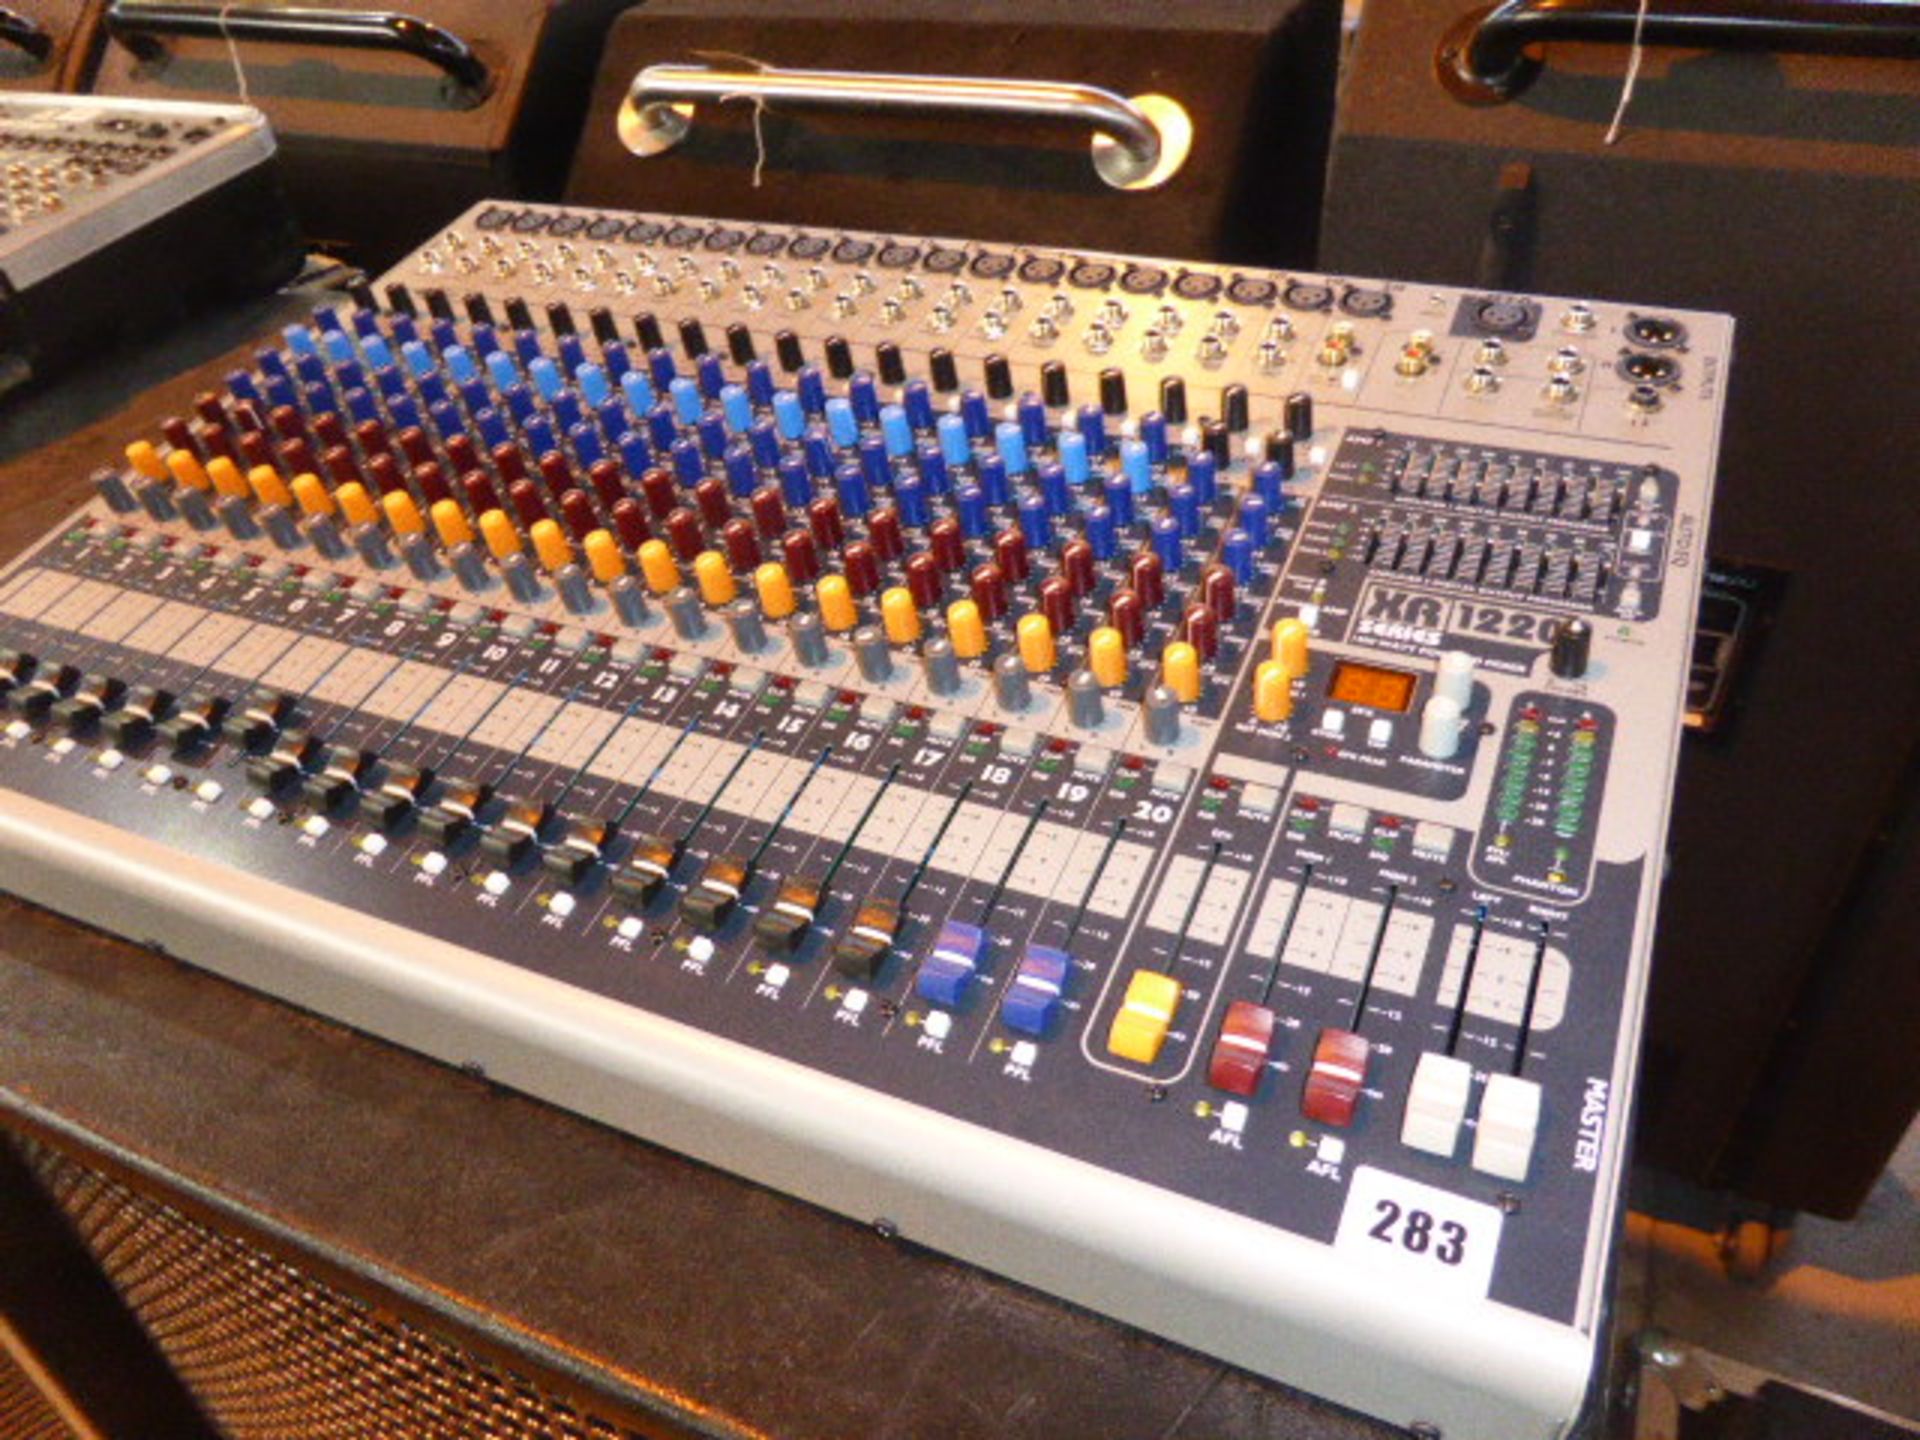 Peavey XR 1220 series mixer - Image 2 of 2